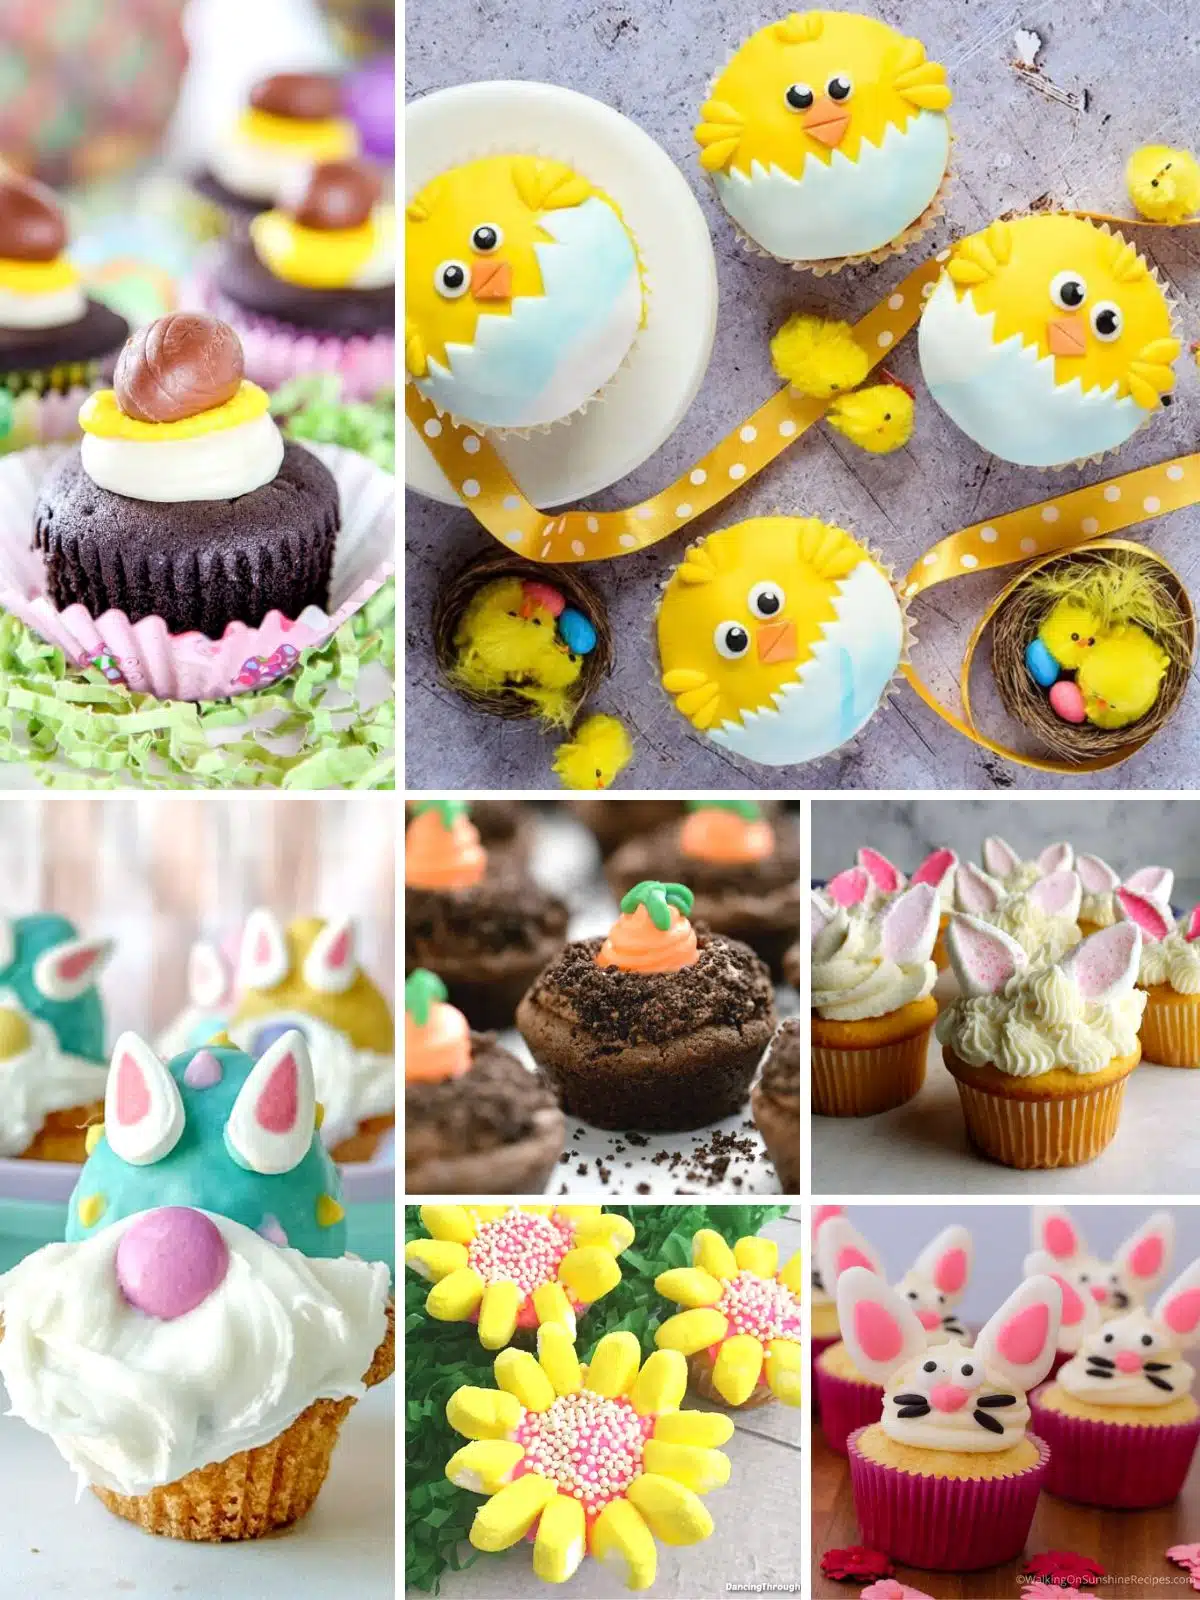 Cute adorable Easter cupcakes.